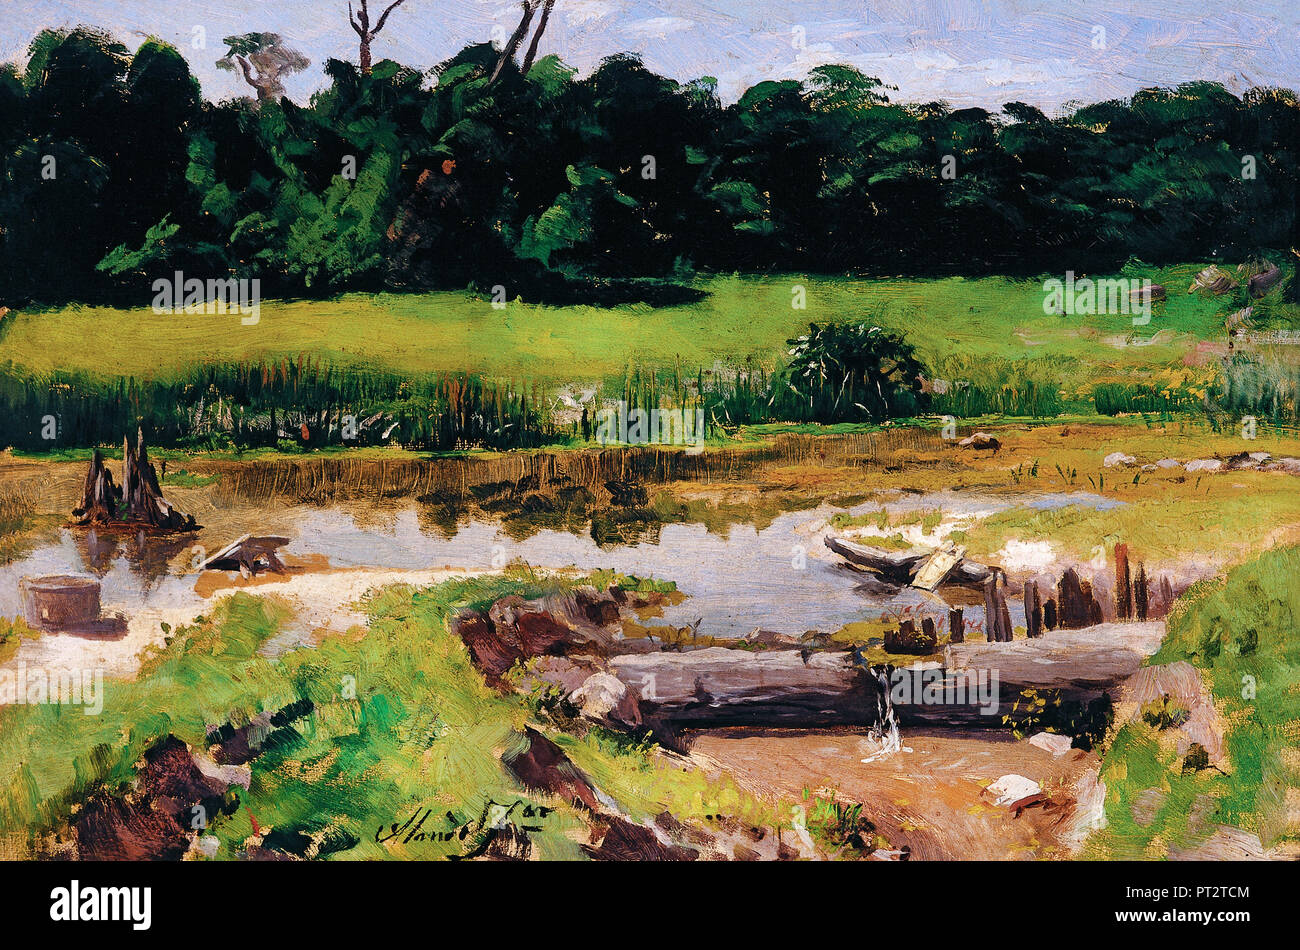 Jose Ferraz de Almeida Junior, Fluvial Landscape 1899 Oil on panel, Pinacoteca do Estado de Sao Paulo, Sao Paulo, Brazil. Stock Photo